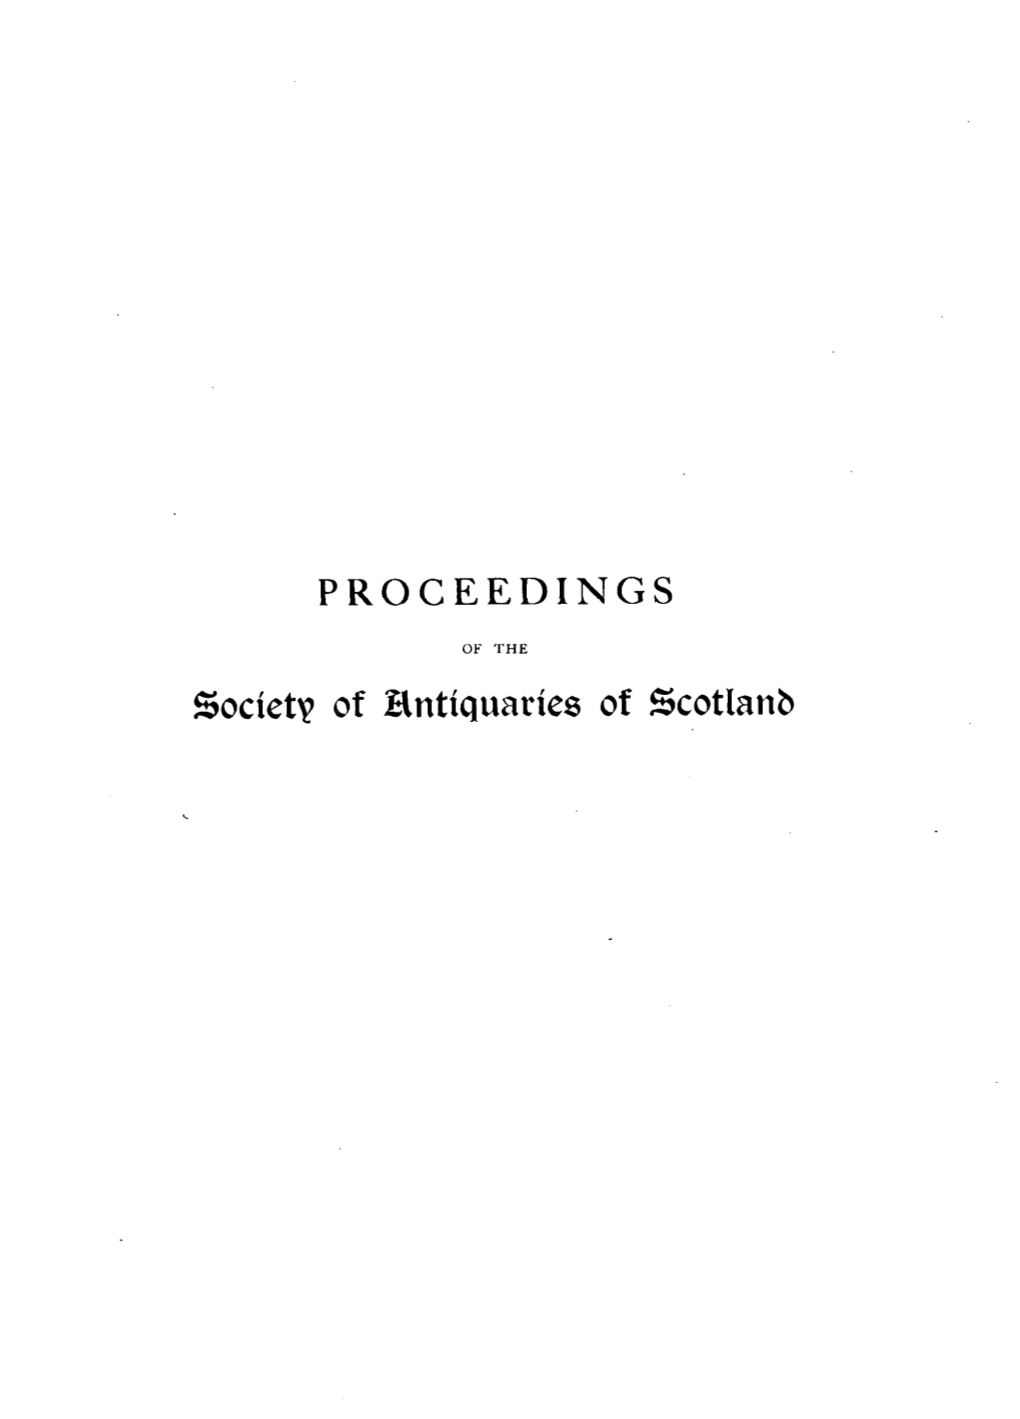 Society of Hnttquaries of Scotland PROCEEDINGS